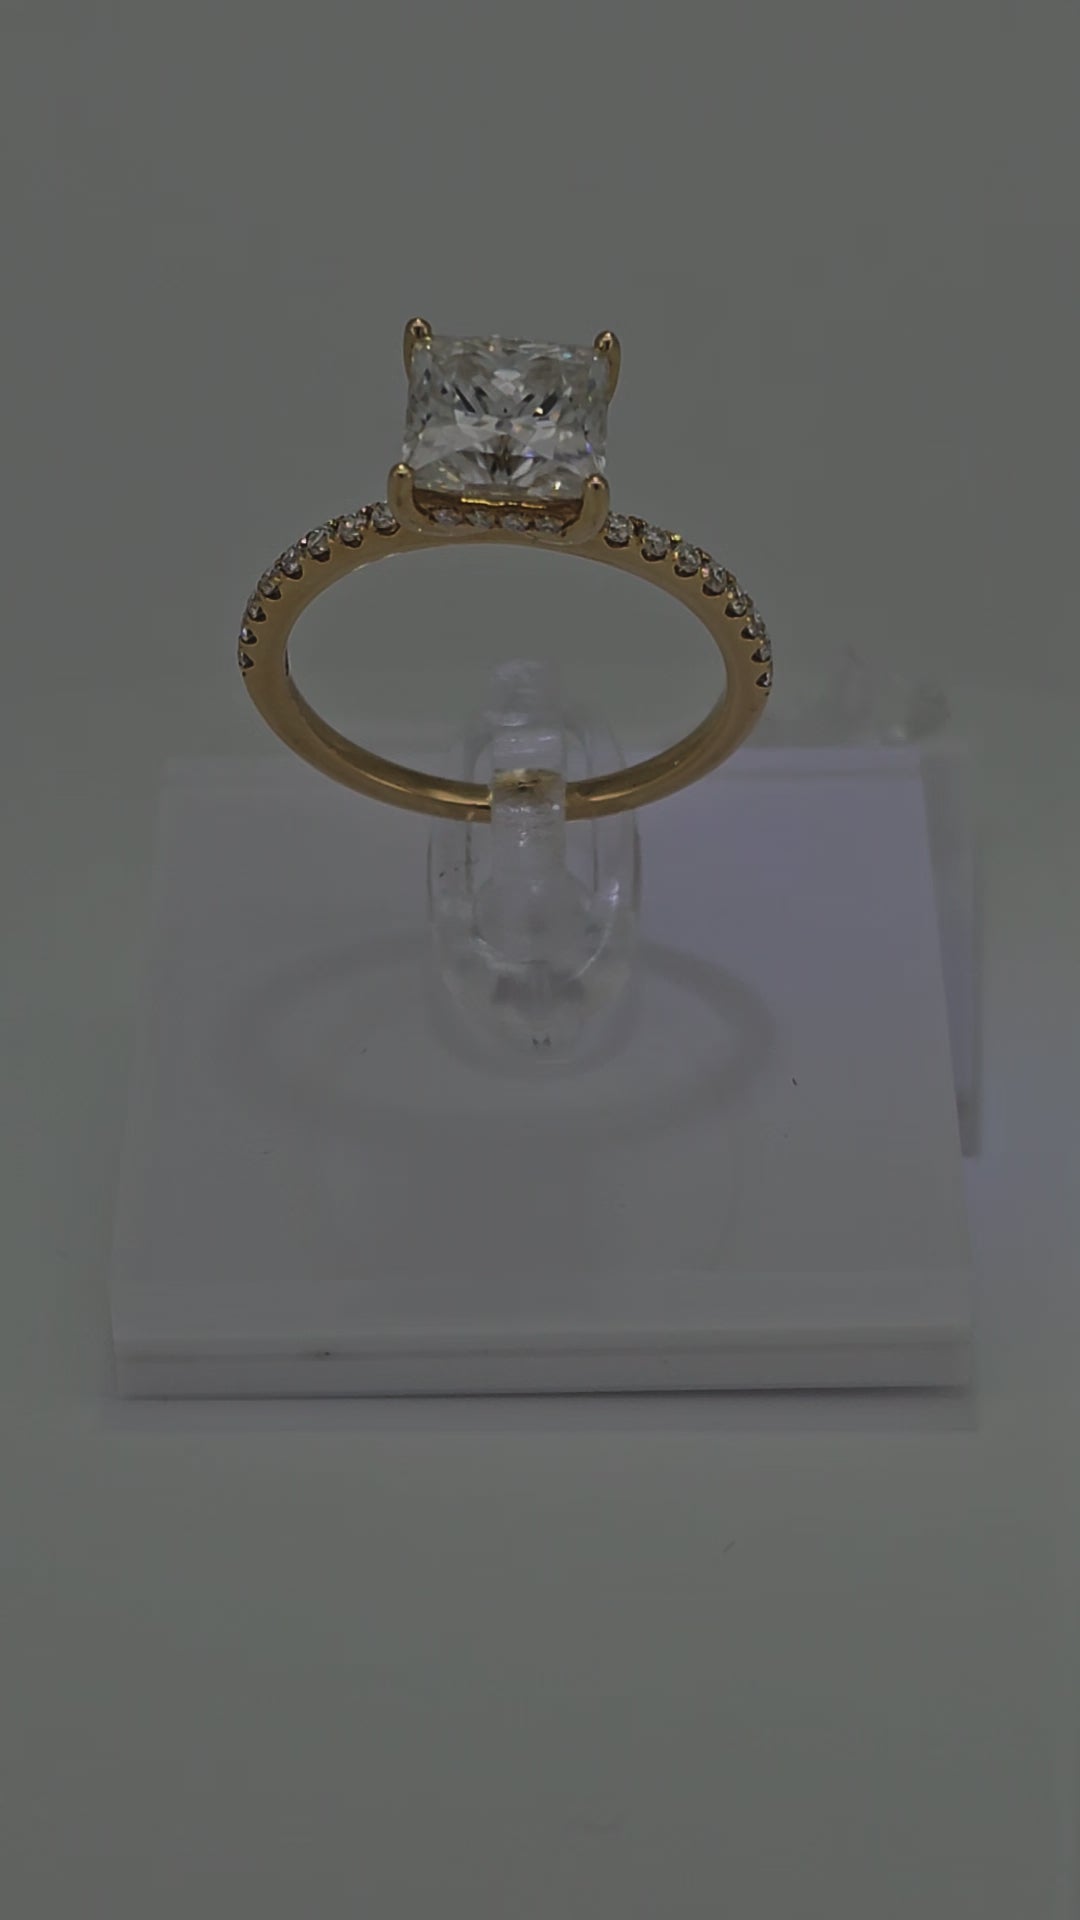 Beautiful Traditional 14 Karat Solid Gold Princess Cut Diamond Ring from Boujee ice